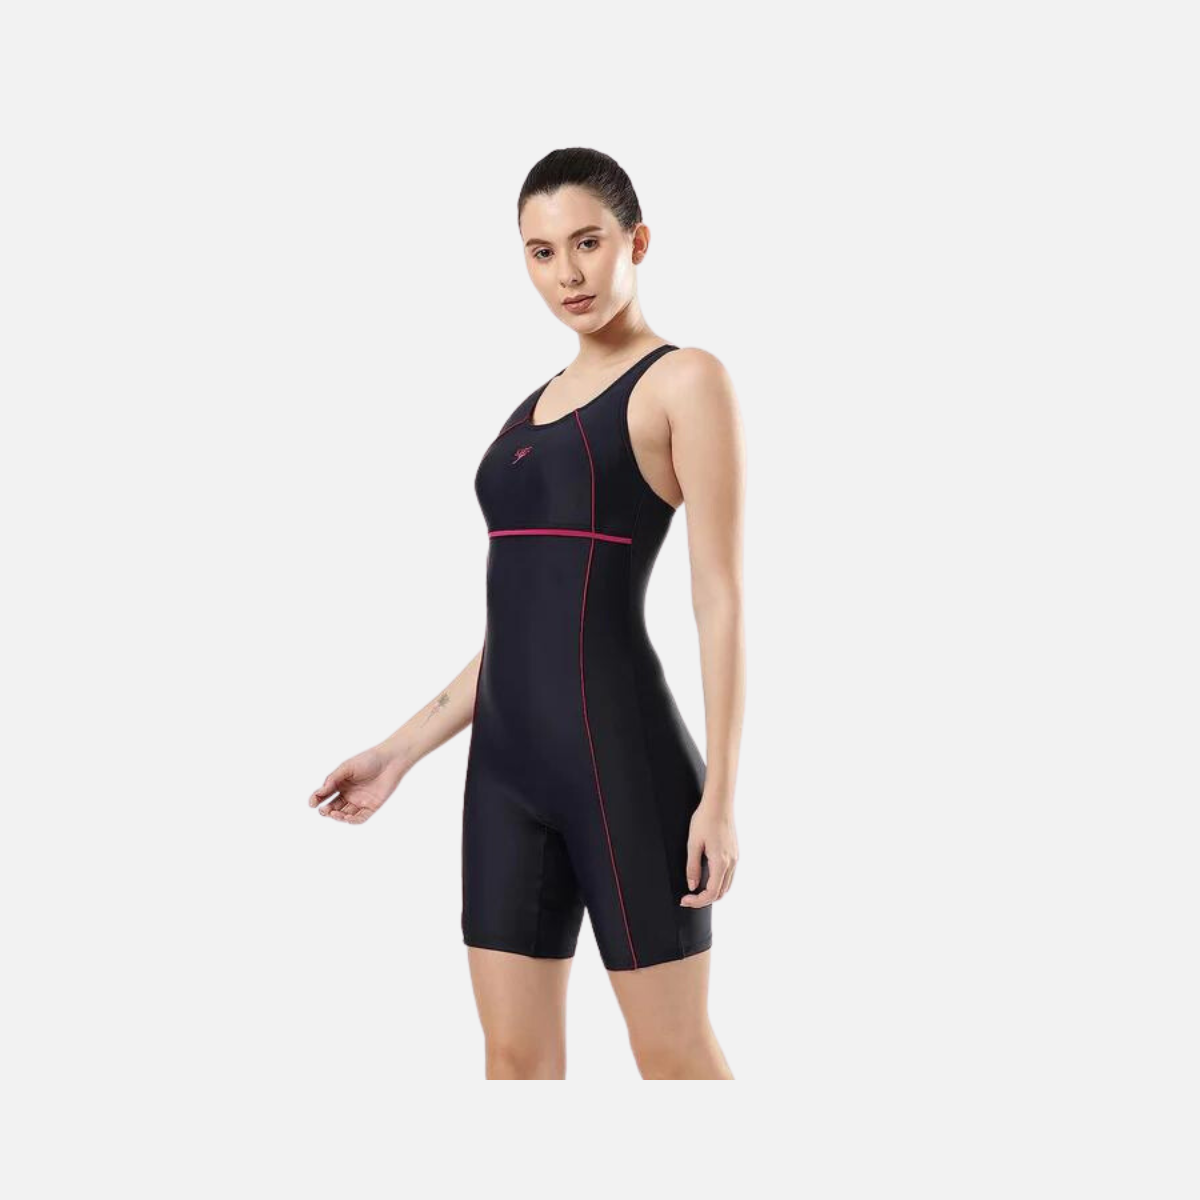 Speedo Classic Racer Back Women's Legsuit Swimwear -True navy/Berry